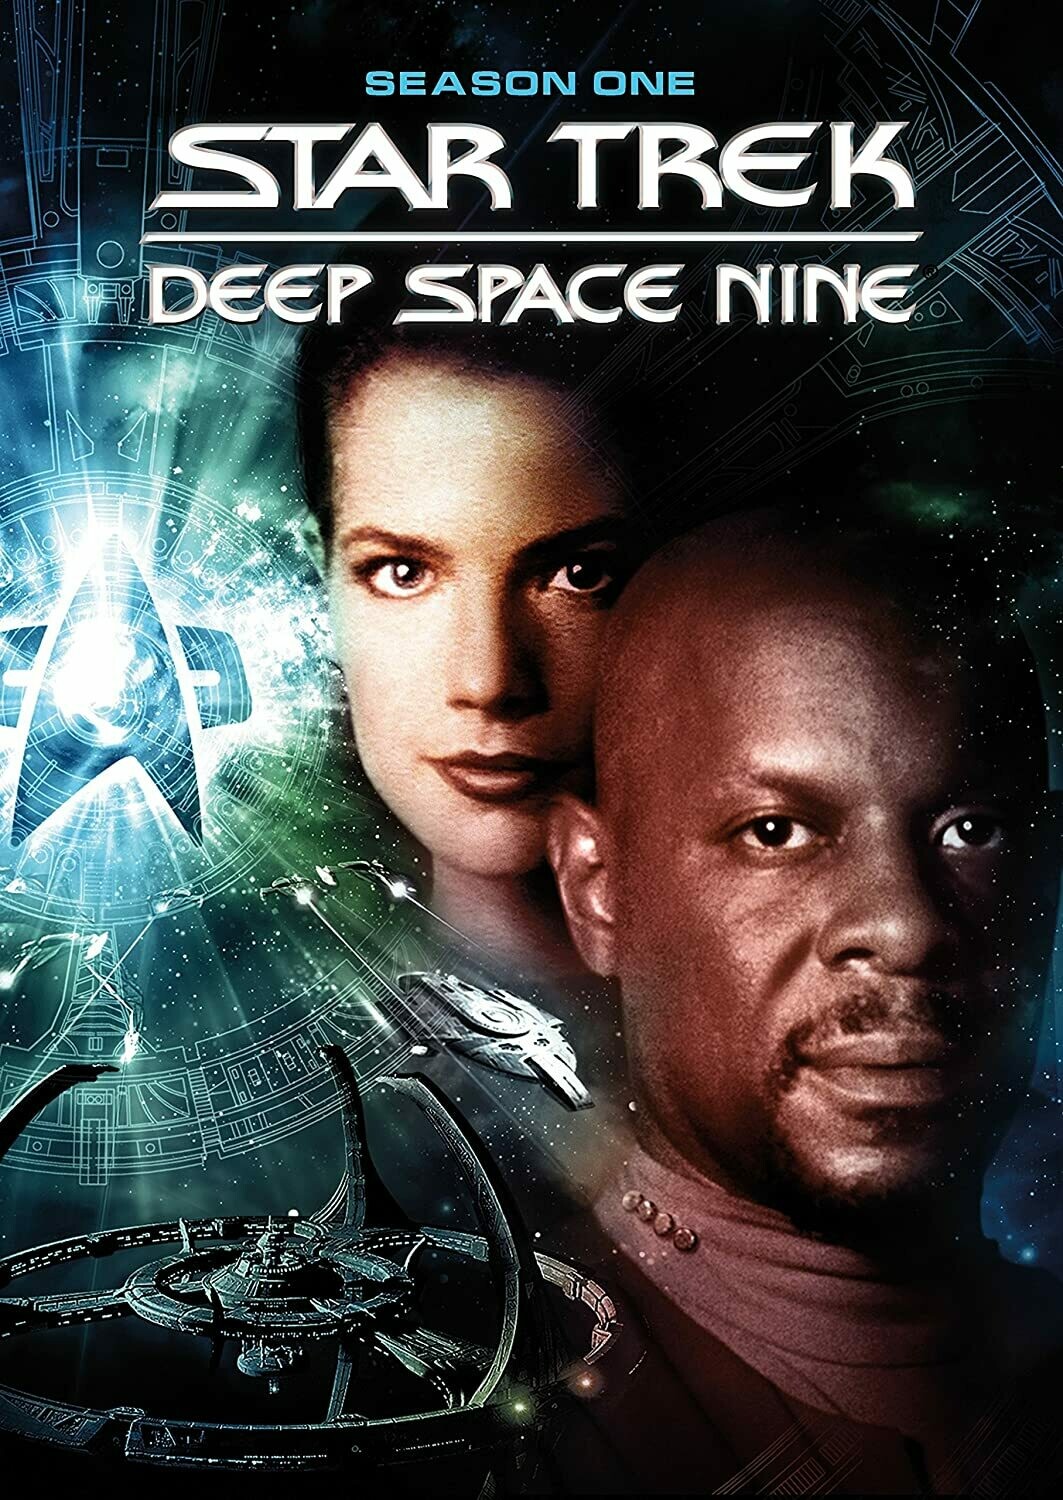 Star Trek Deep Space Nine Season One (7 day rental)